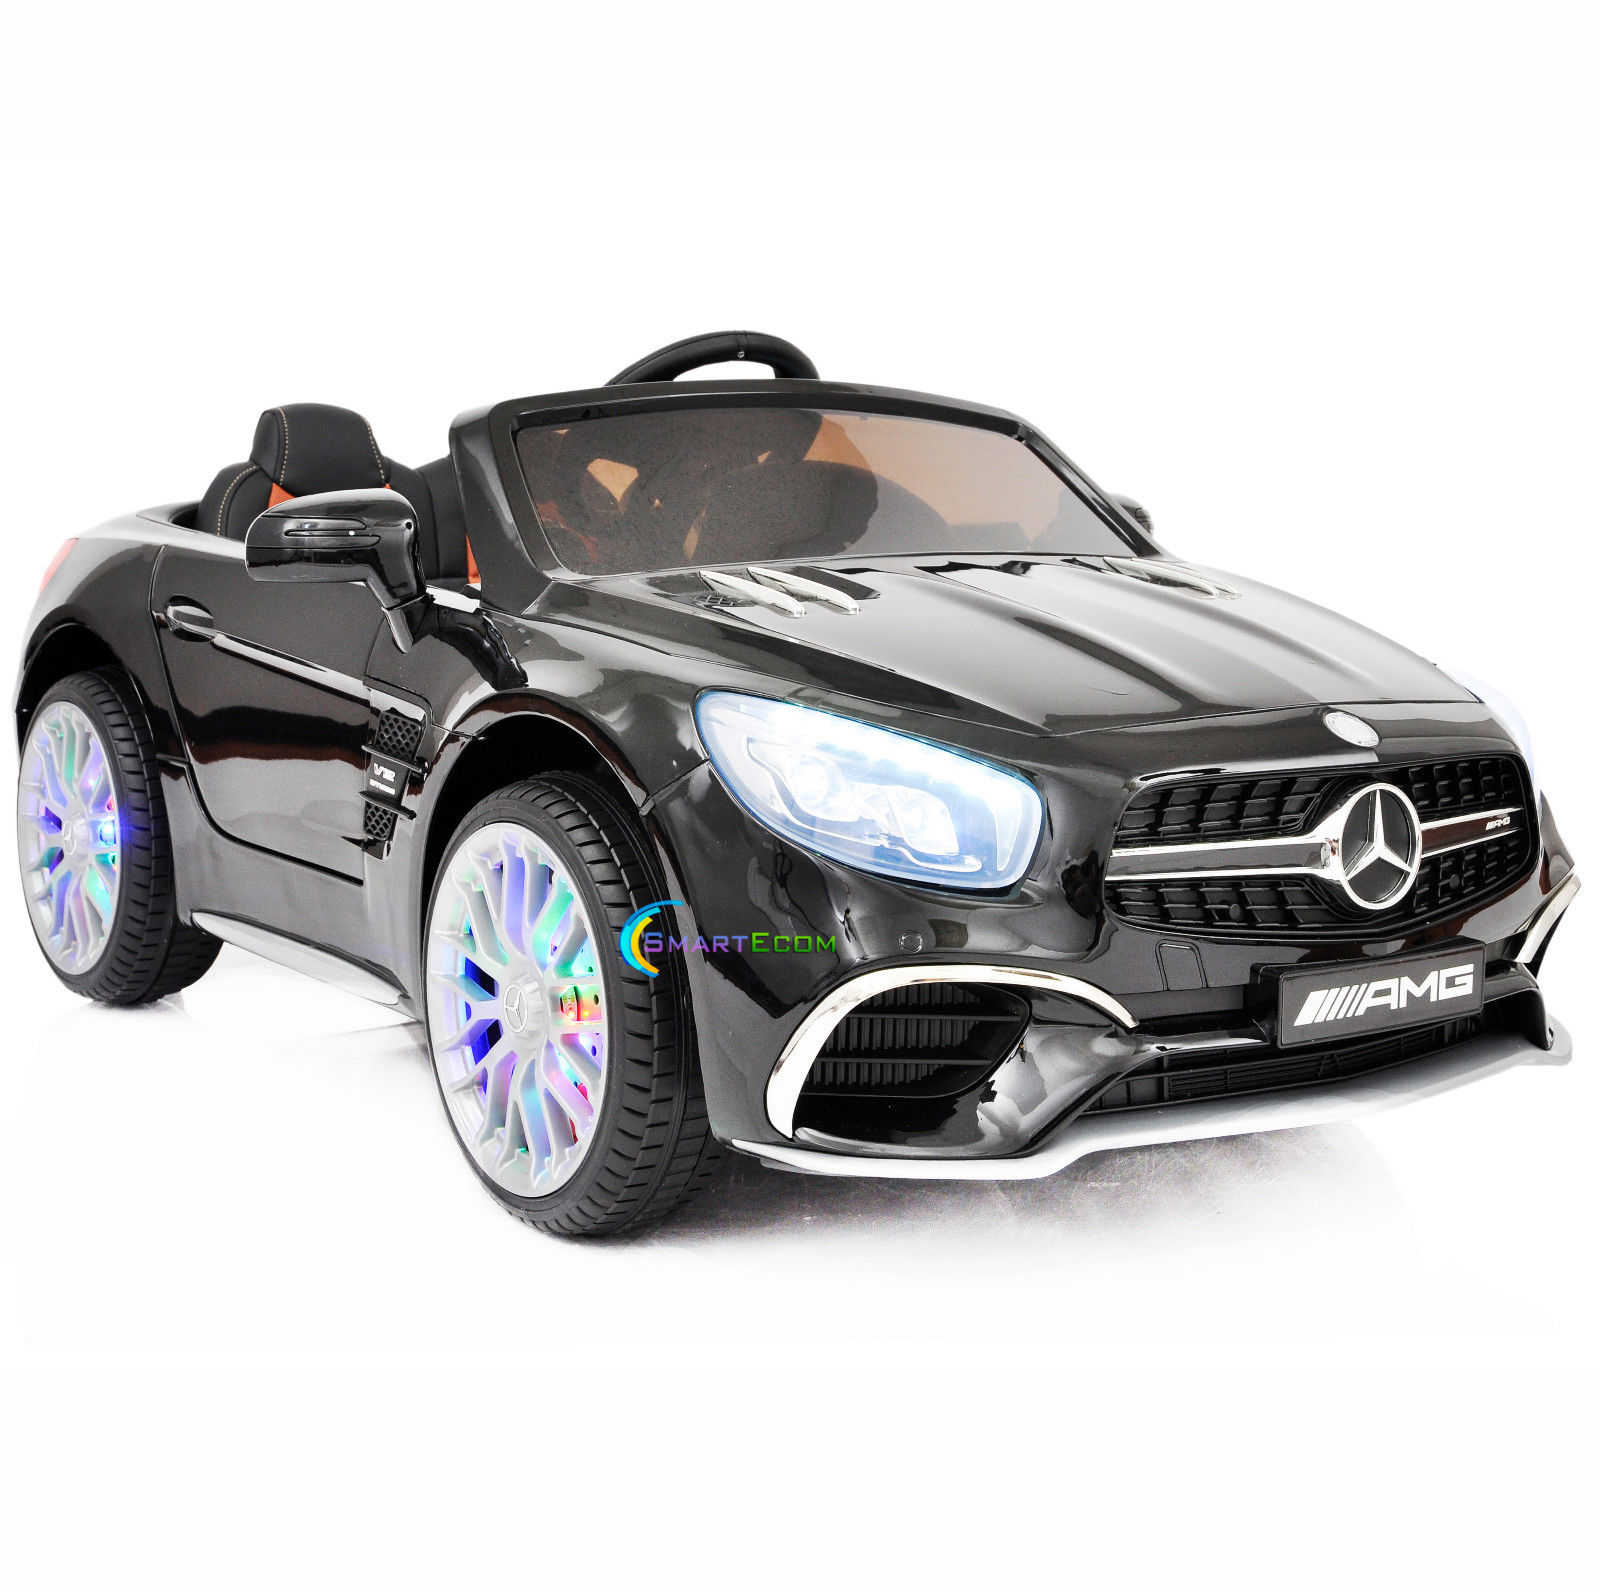 mercedes ride on toy car